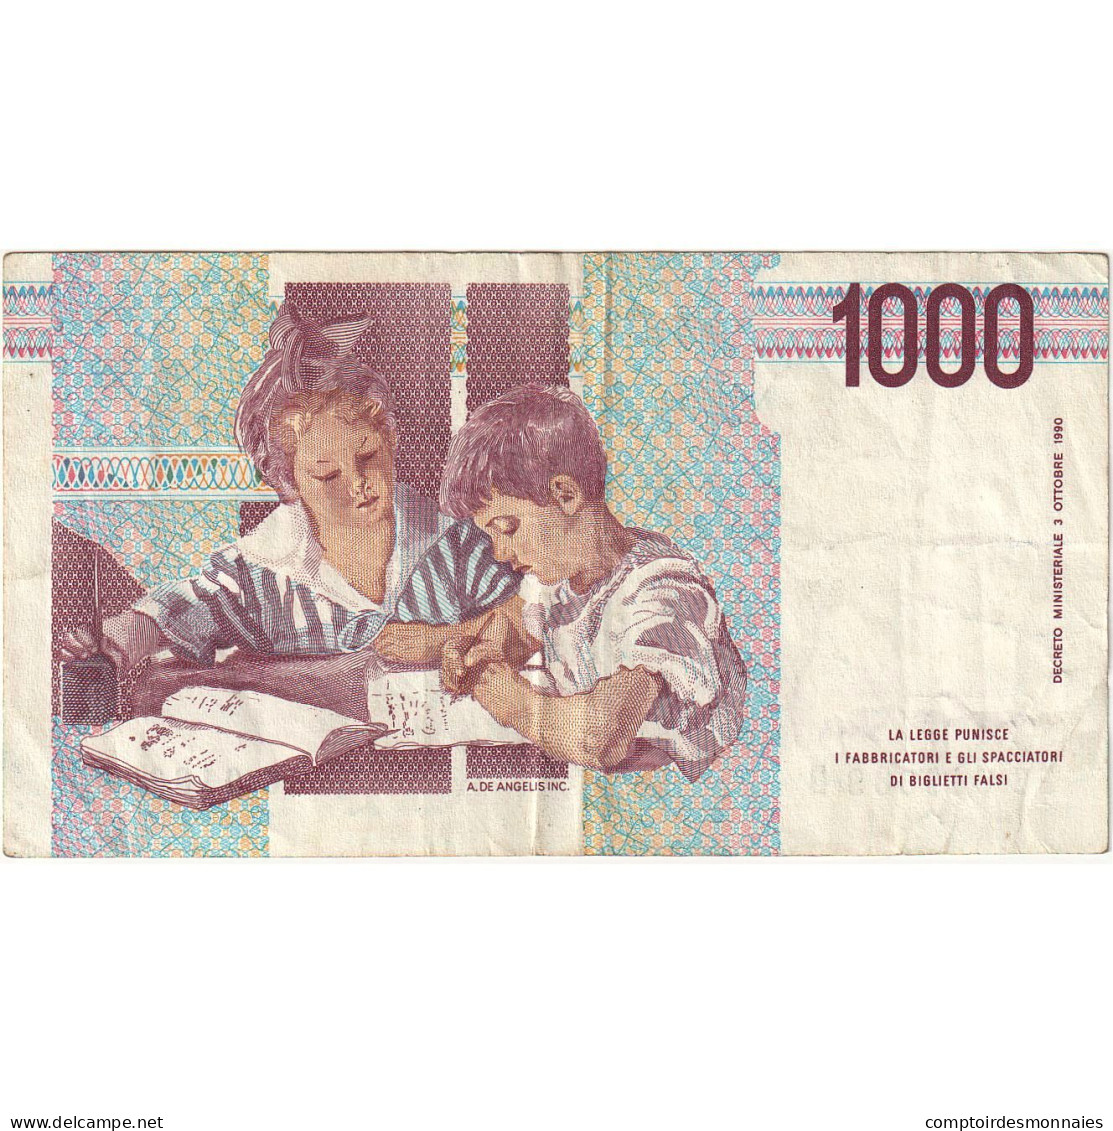 Italie, 1000 Lire, 1990-10-03, KM:114c, SUP - 1000 Lire